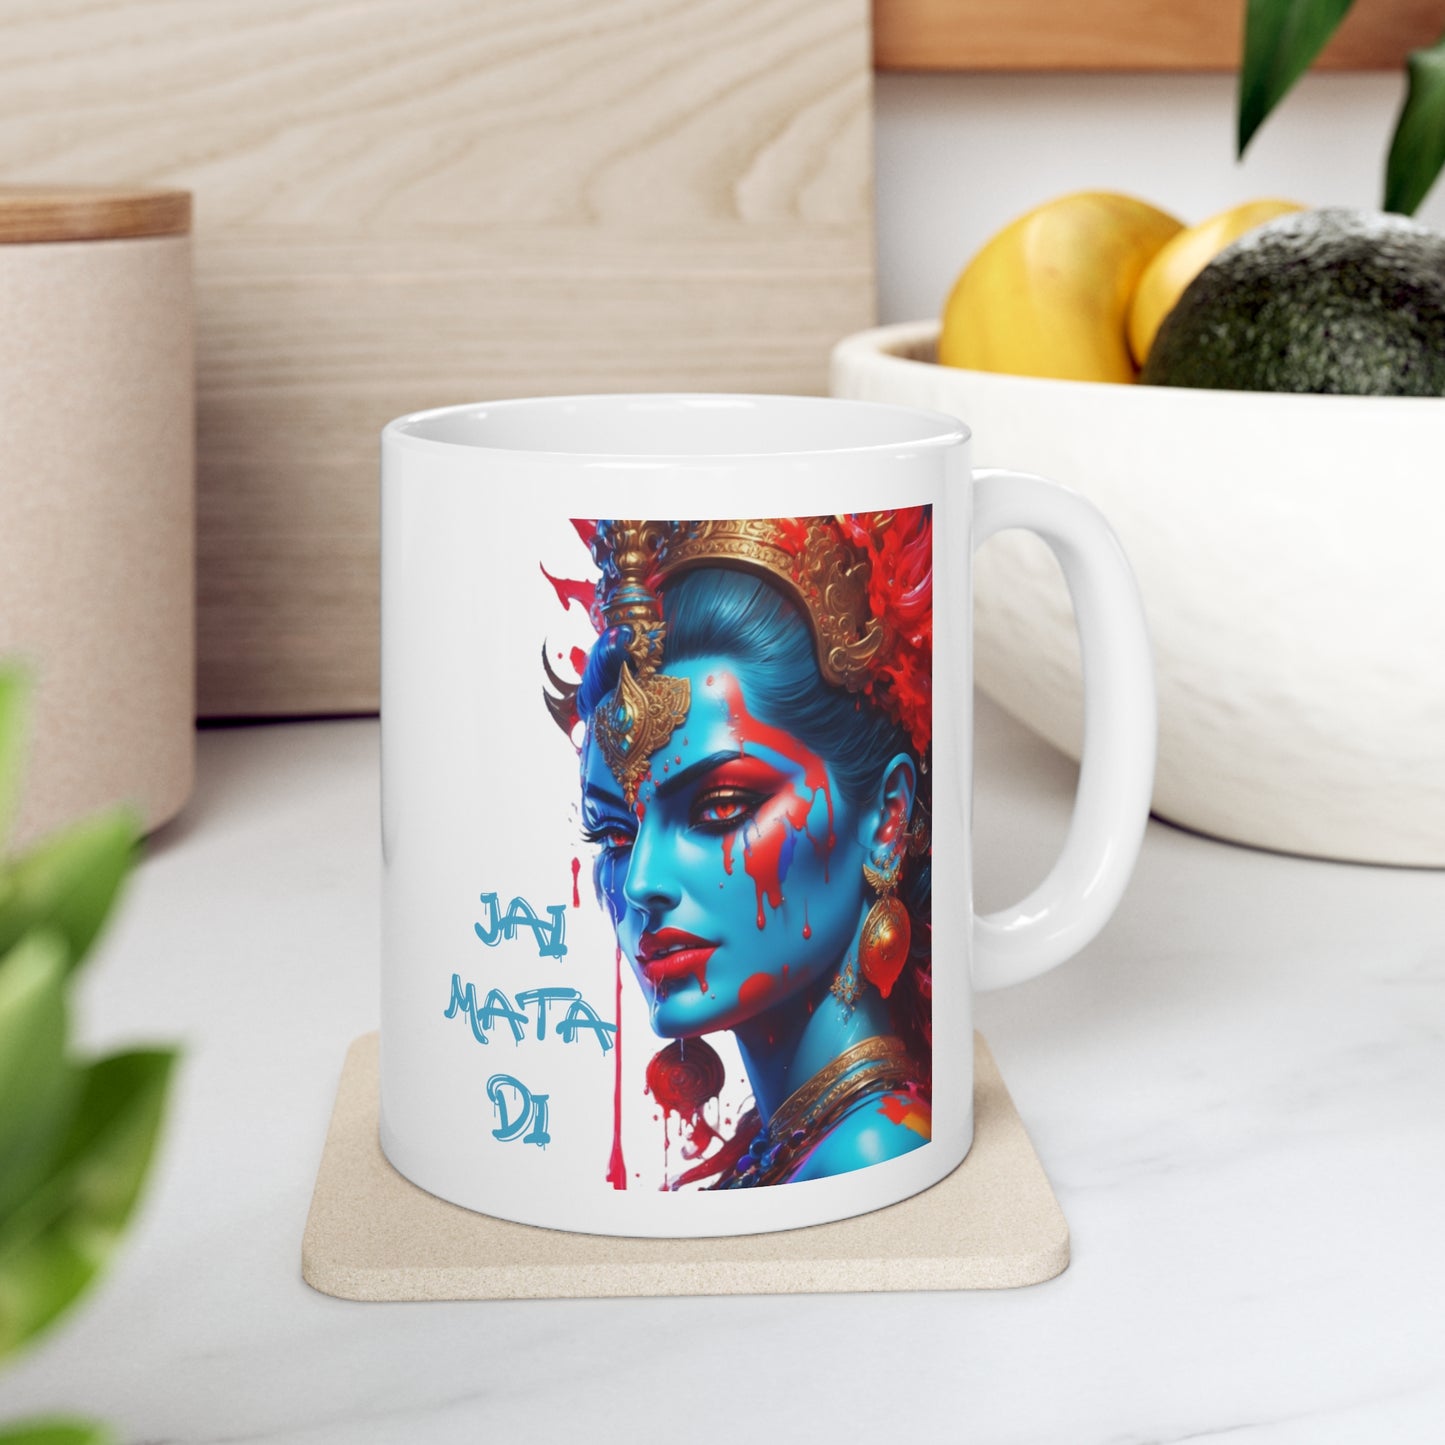 Maa Kali Mug | Jai Mata Di | Hindu Gift | The Black Mother | Spiritual | Coffee | Tea | Hot Chocolate | Goddess | Victory To The Mother Goddess | Ceramic Mug |11oz